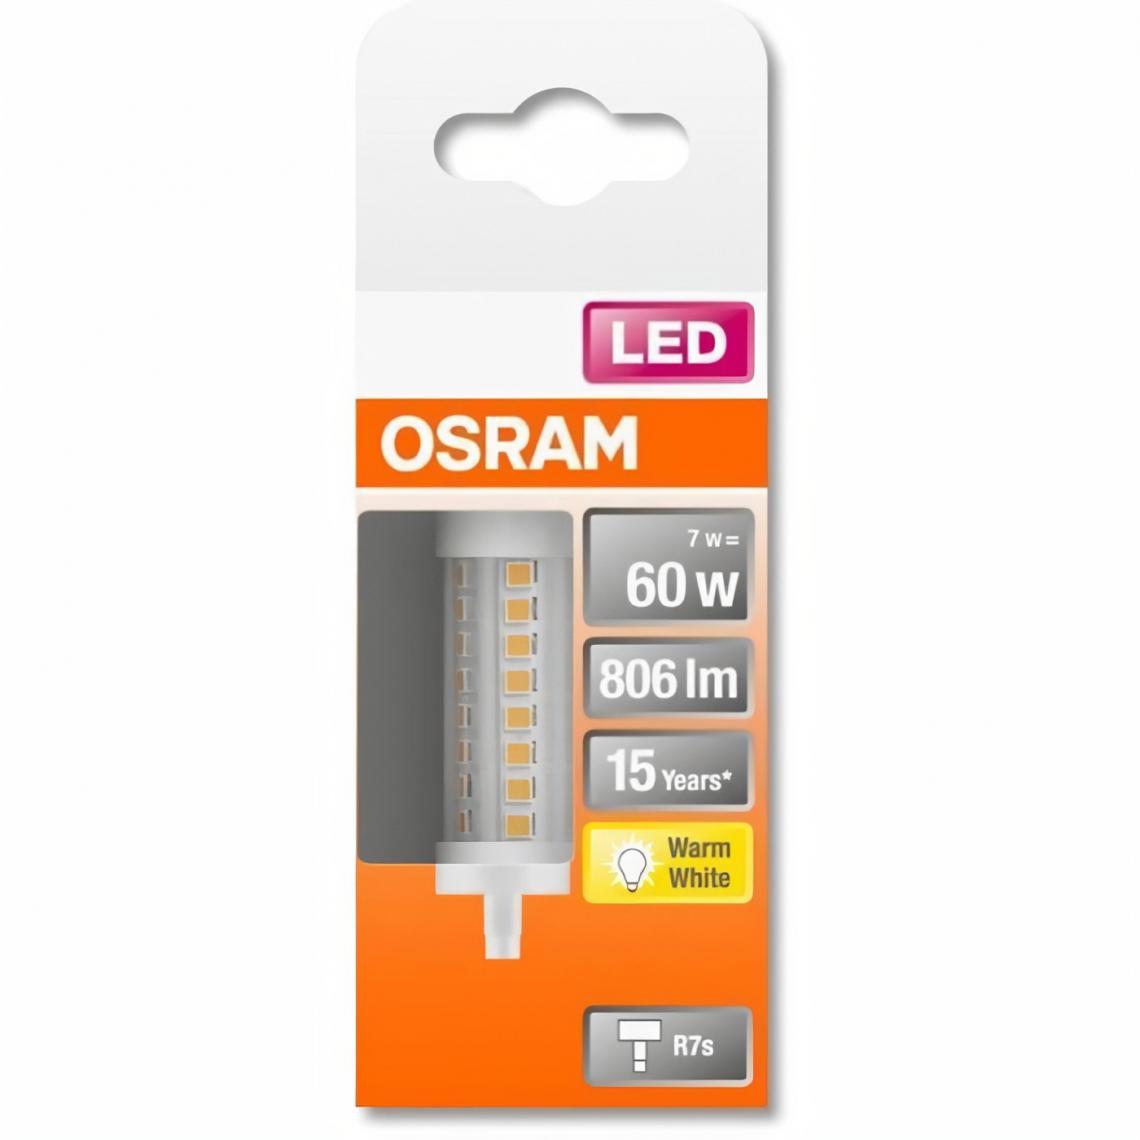 Osram - OSRAM Ampoule LED Crayon 78mm 7W=60 R7S chaud - Ampoules LED